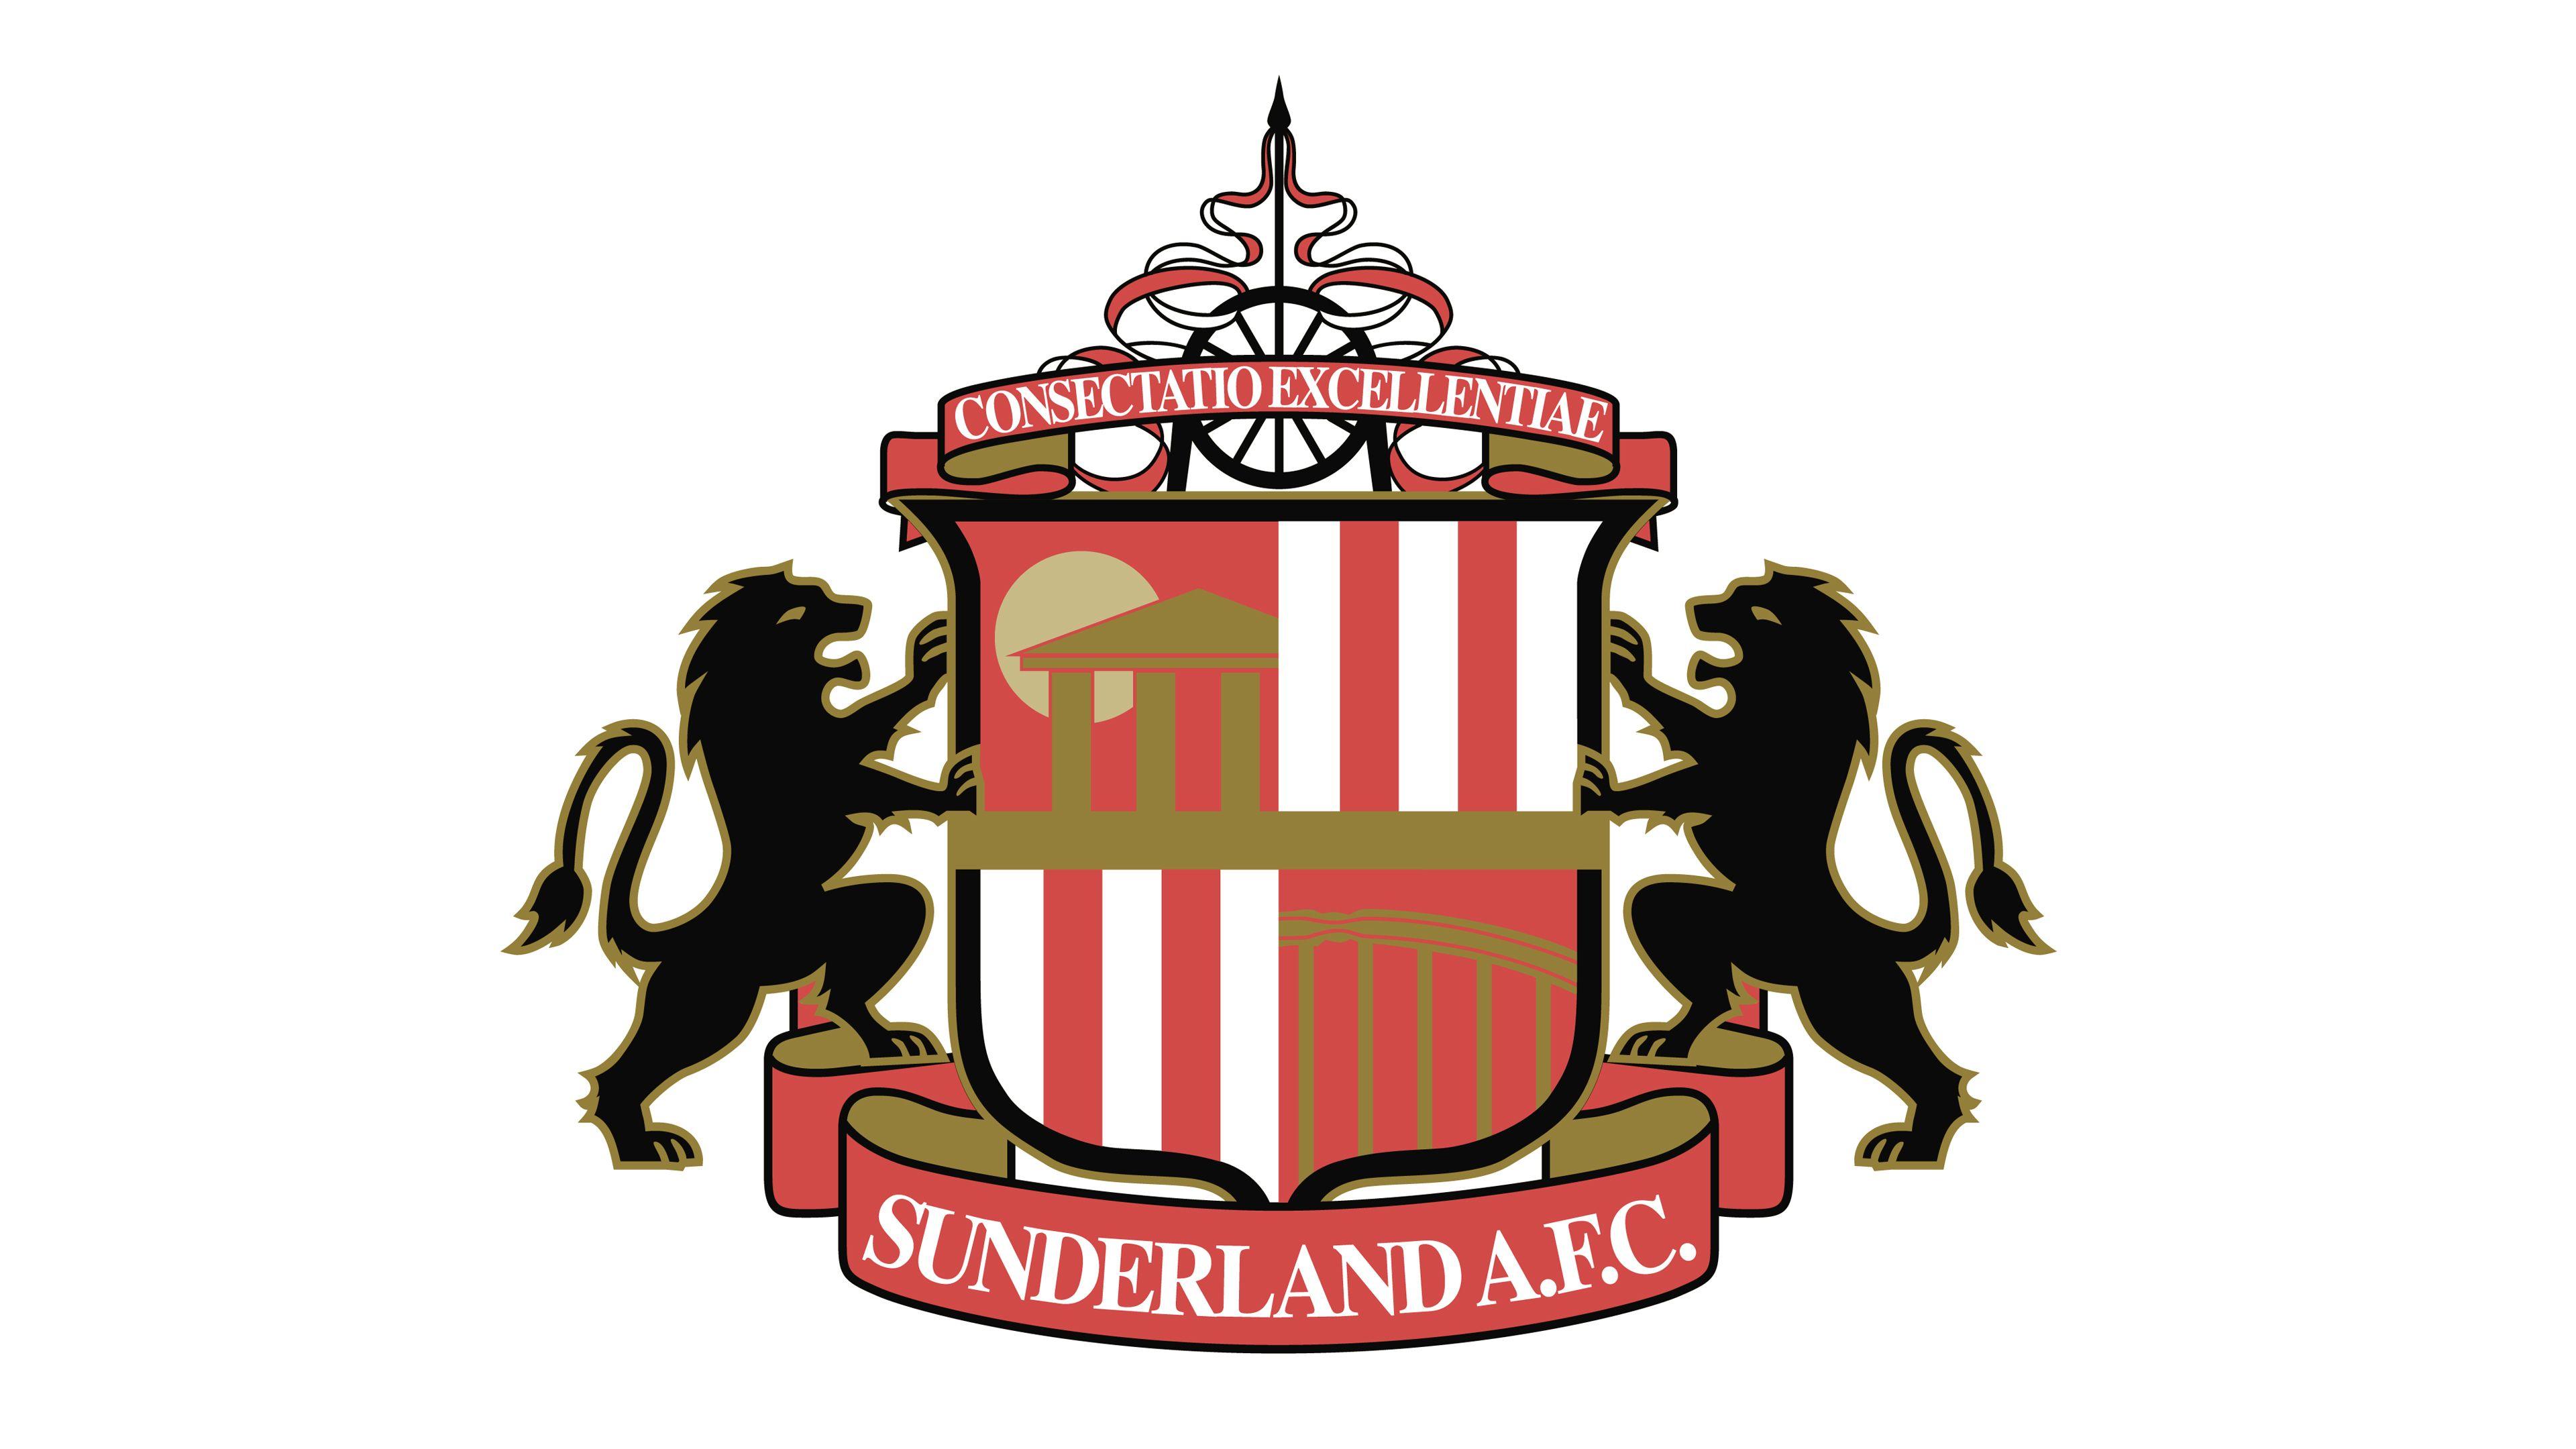 1997 Logo - Sunderland logo - Interesting History of the Team Name and emblem